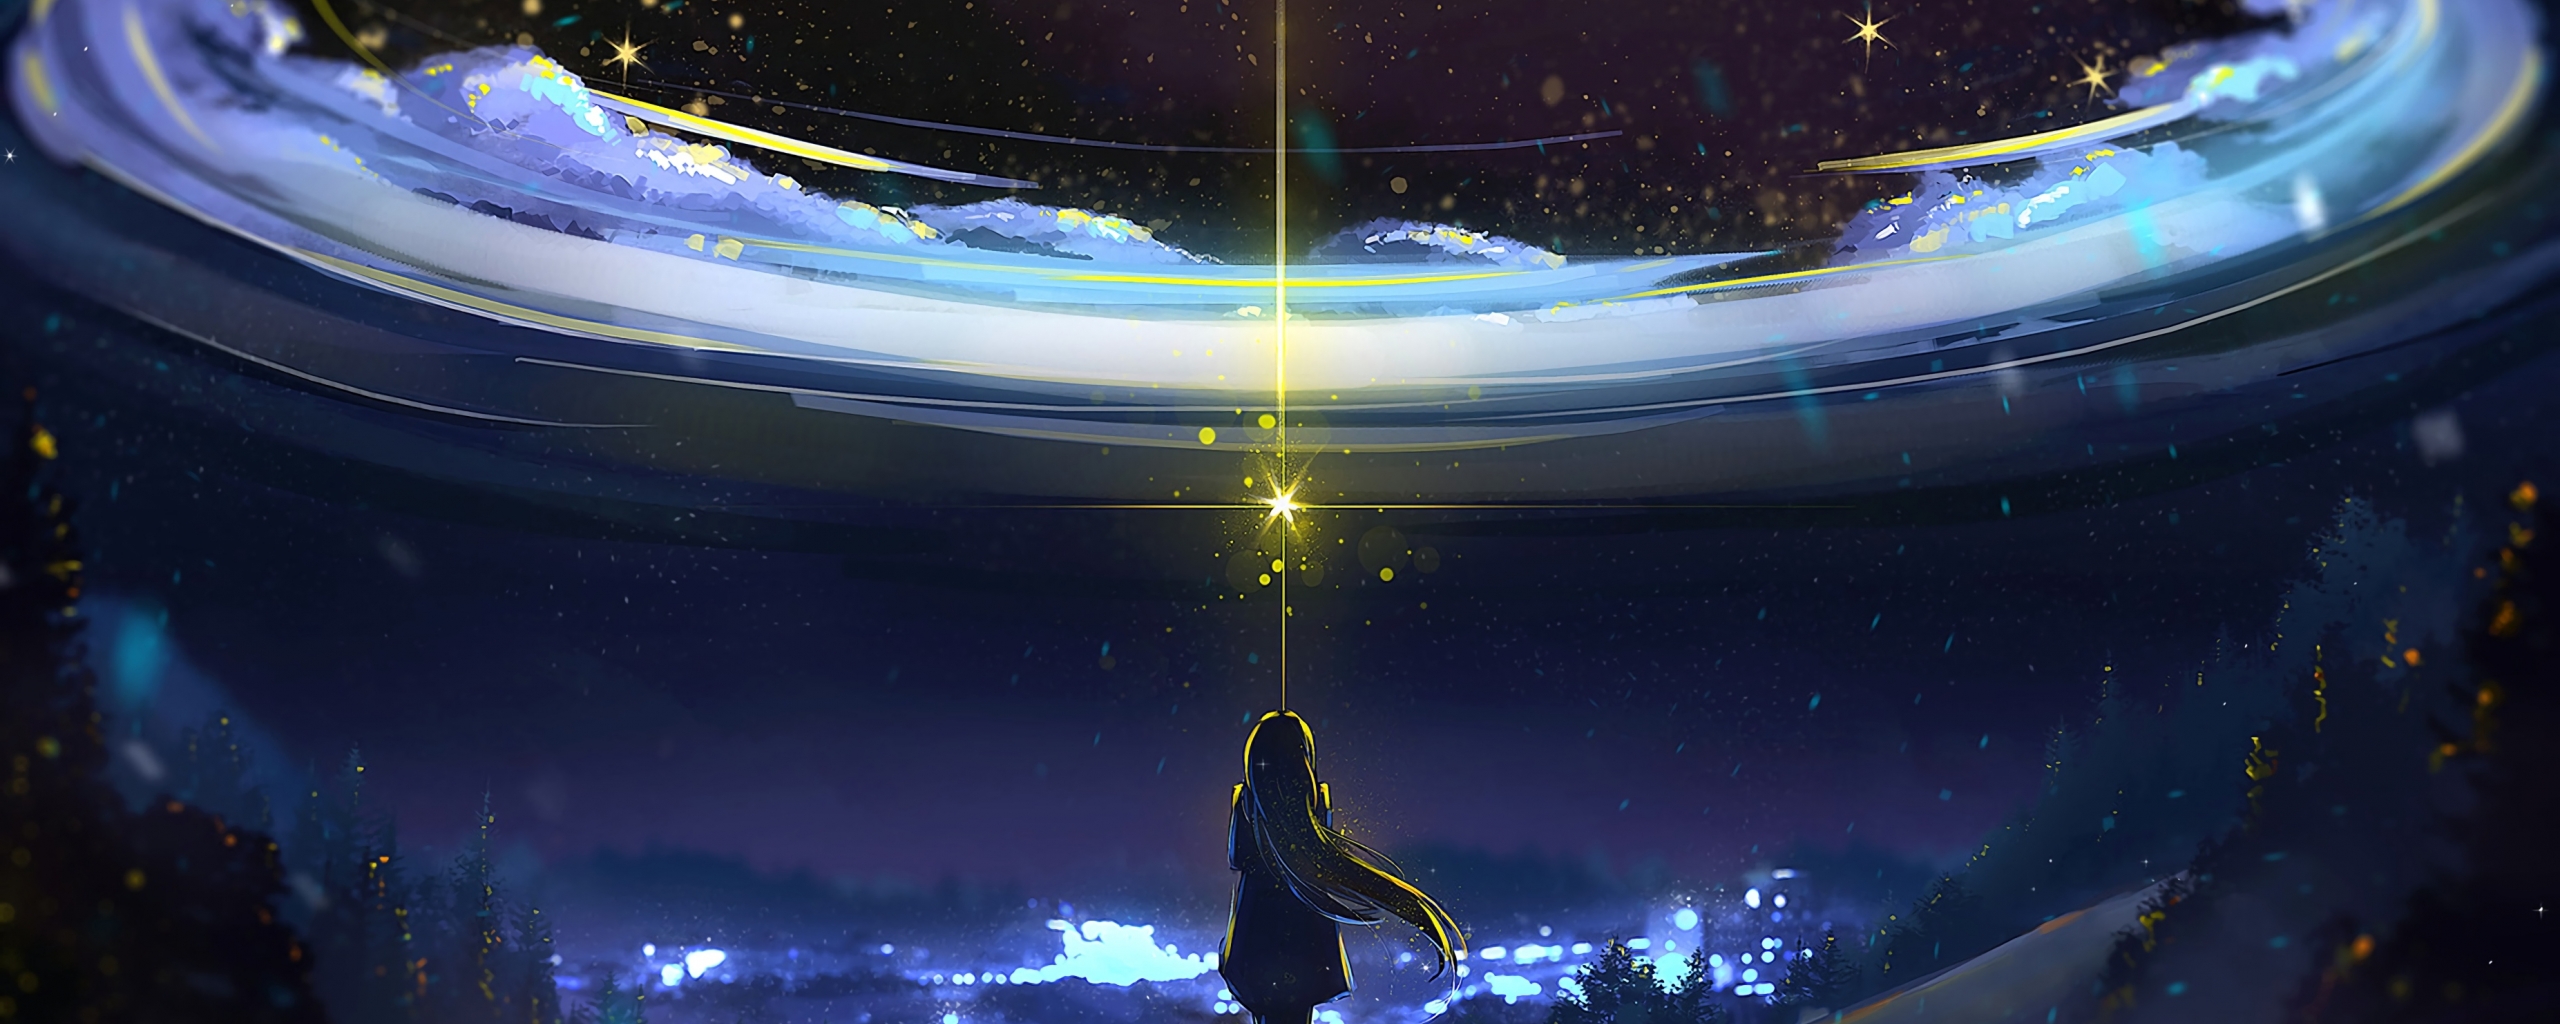 Wallpaper Stars, Anime Girl, Back View, Bokeh, Magic, Night:3706x2294